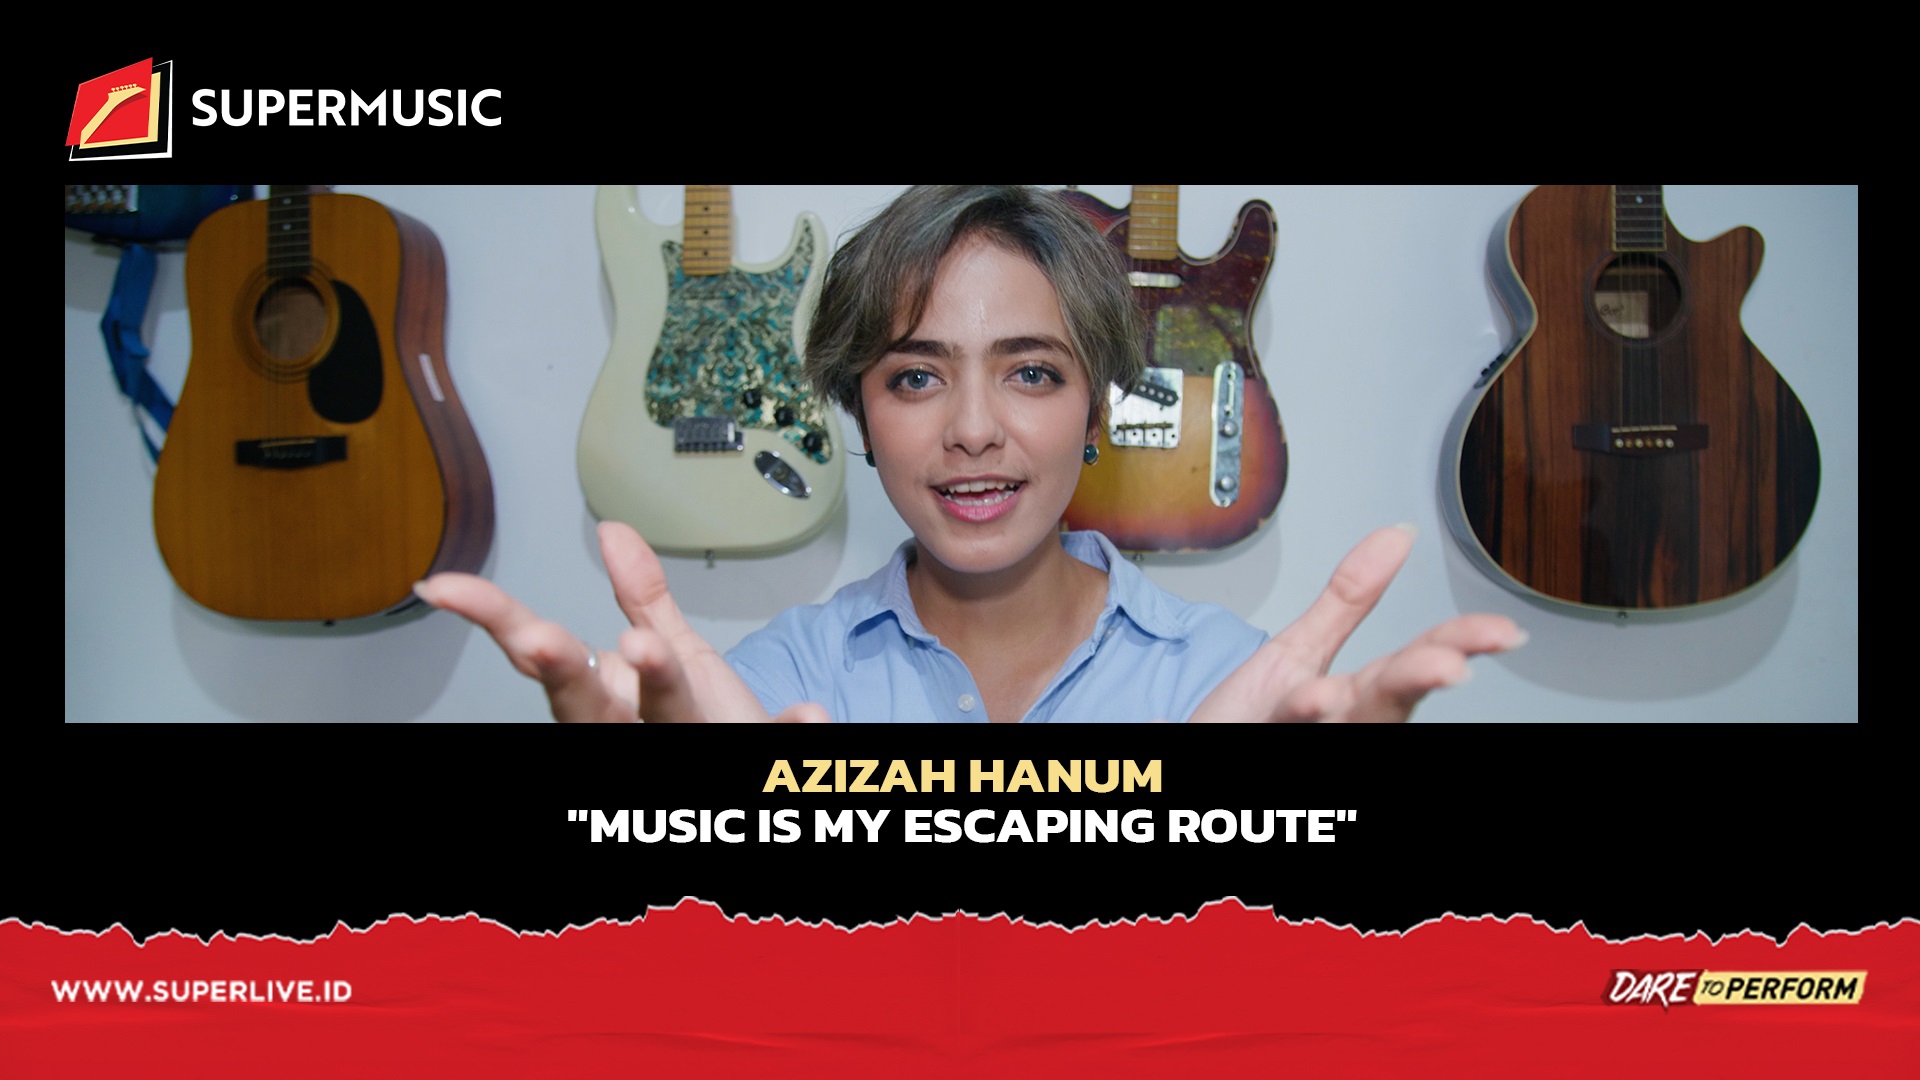 SUPERMUSIC - AZIZAH HANUM "Music Is My Escaping Route"